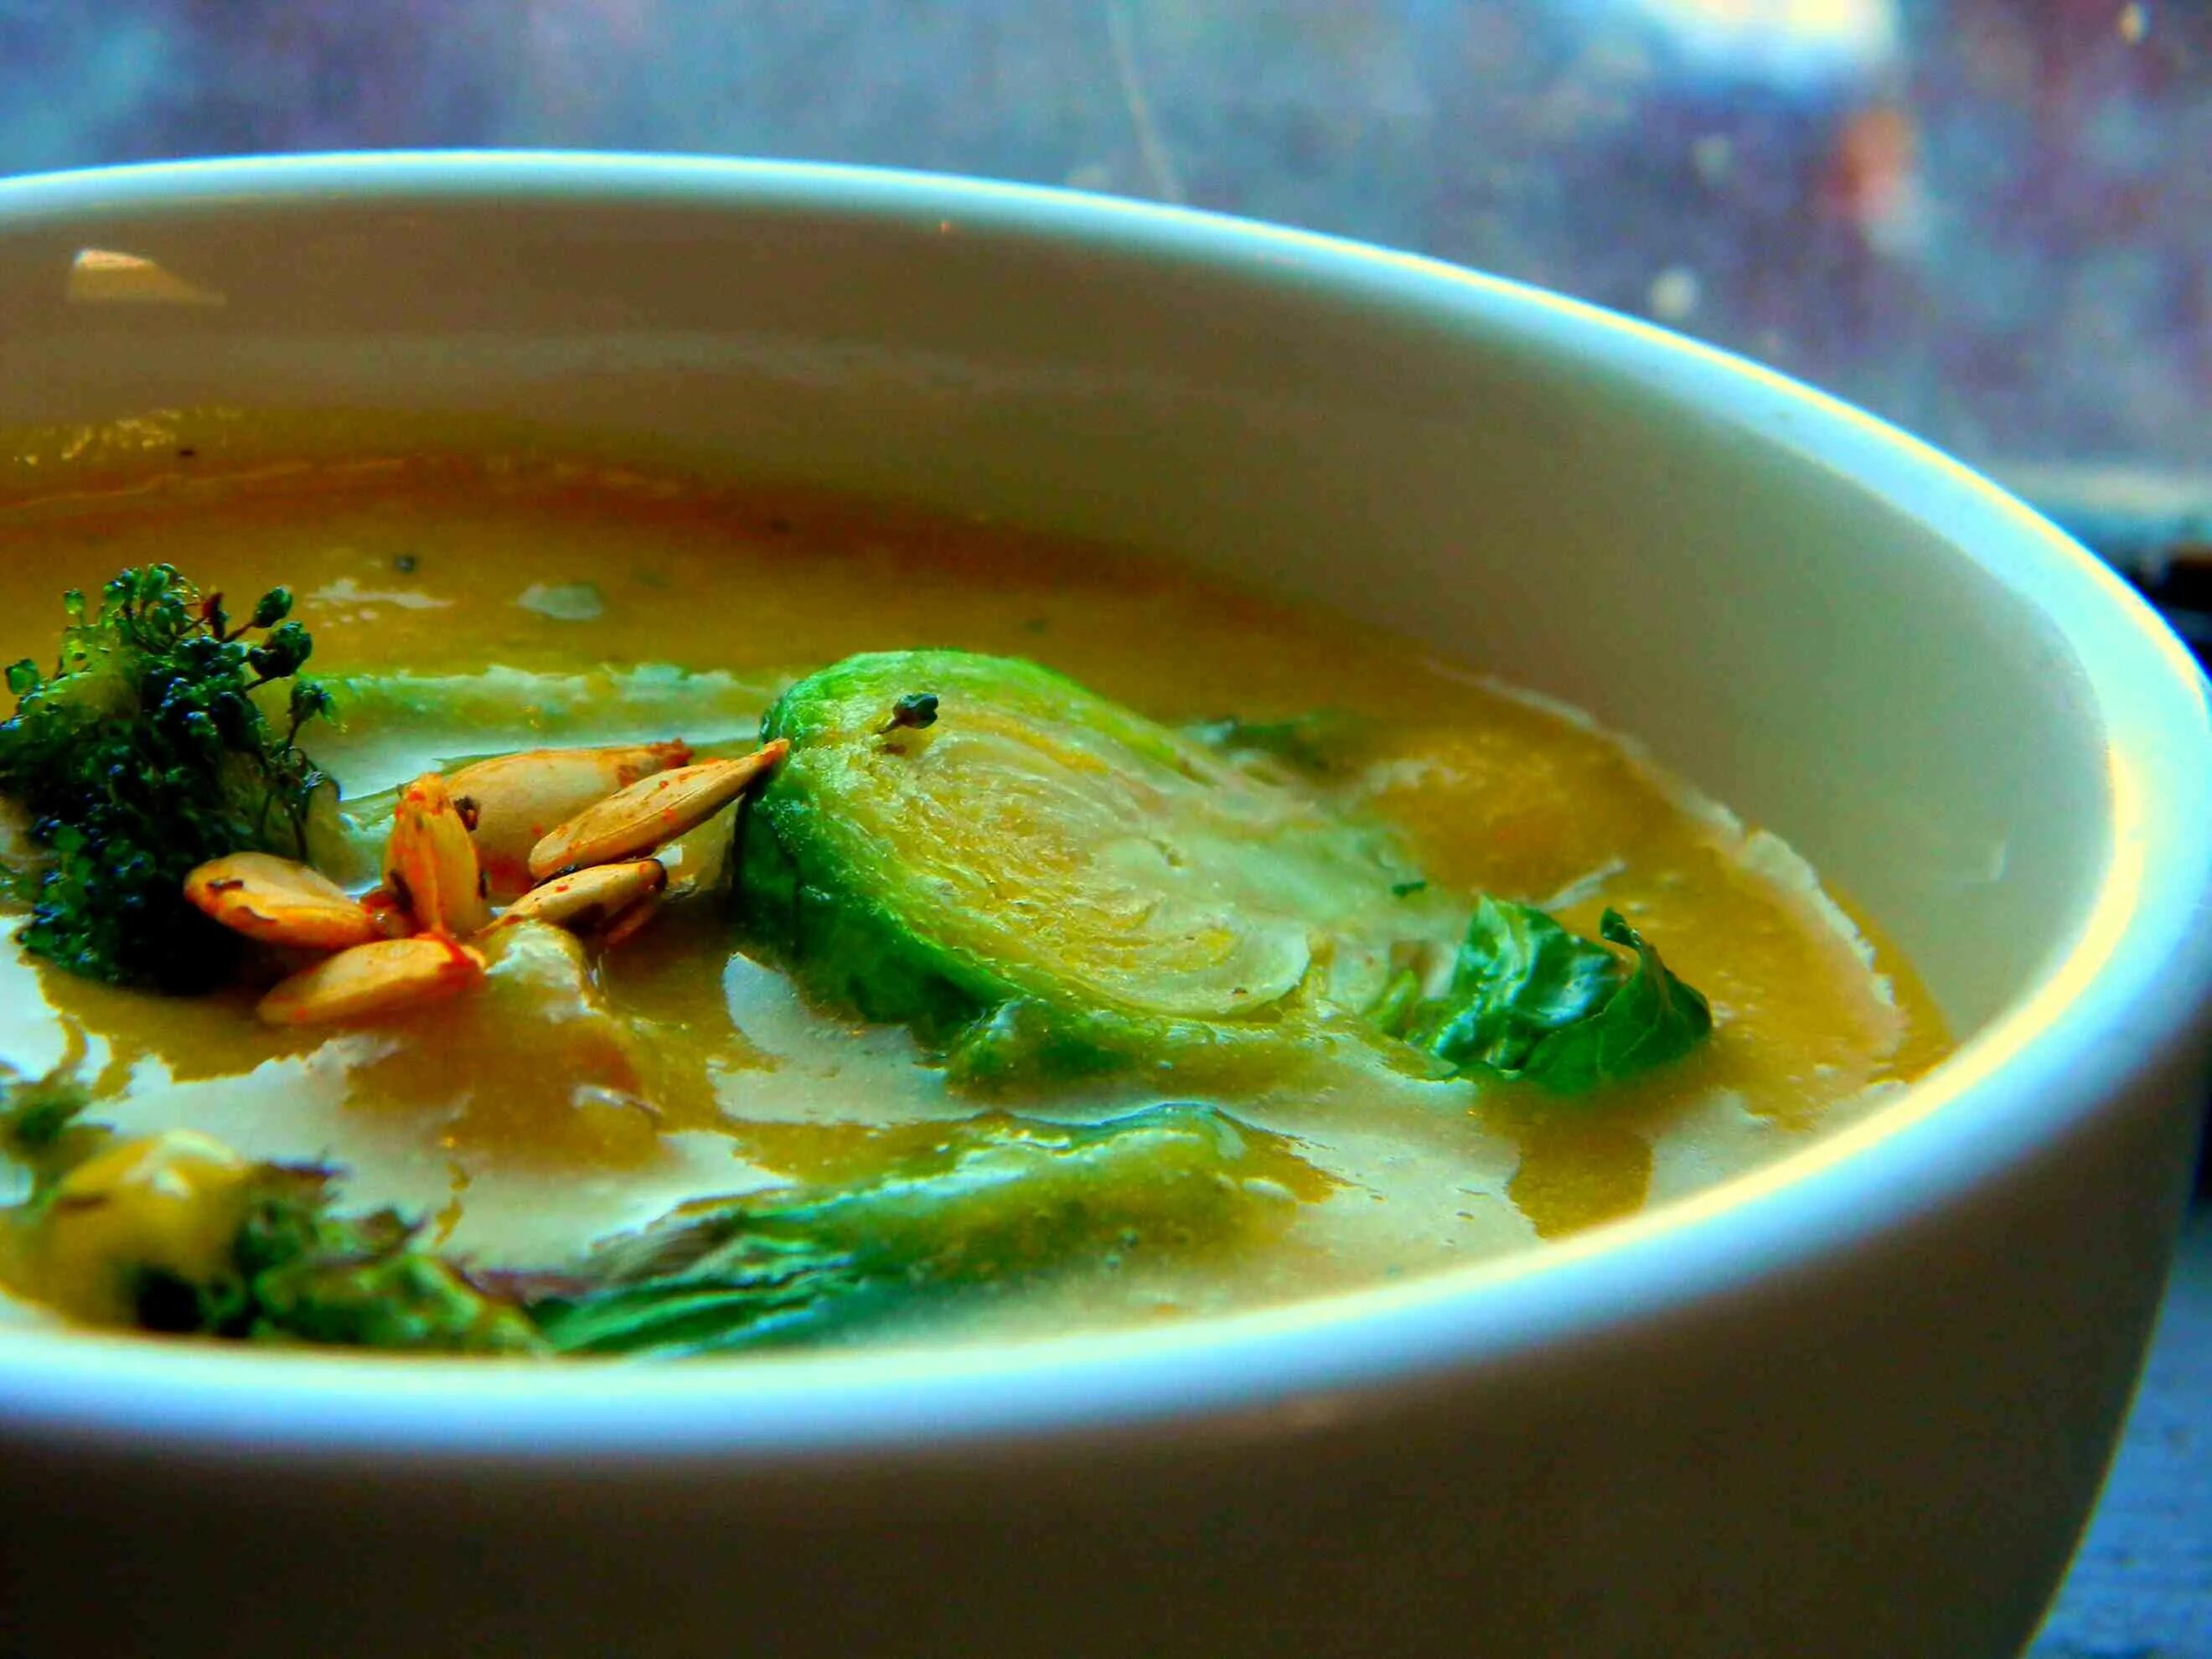 Your soup. Лахана суп. Кухня голубой суп. Фото суп синего цвета. Sprouts Soup.